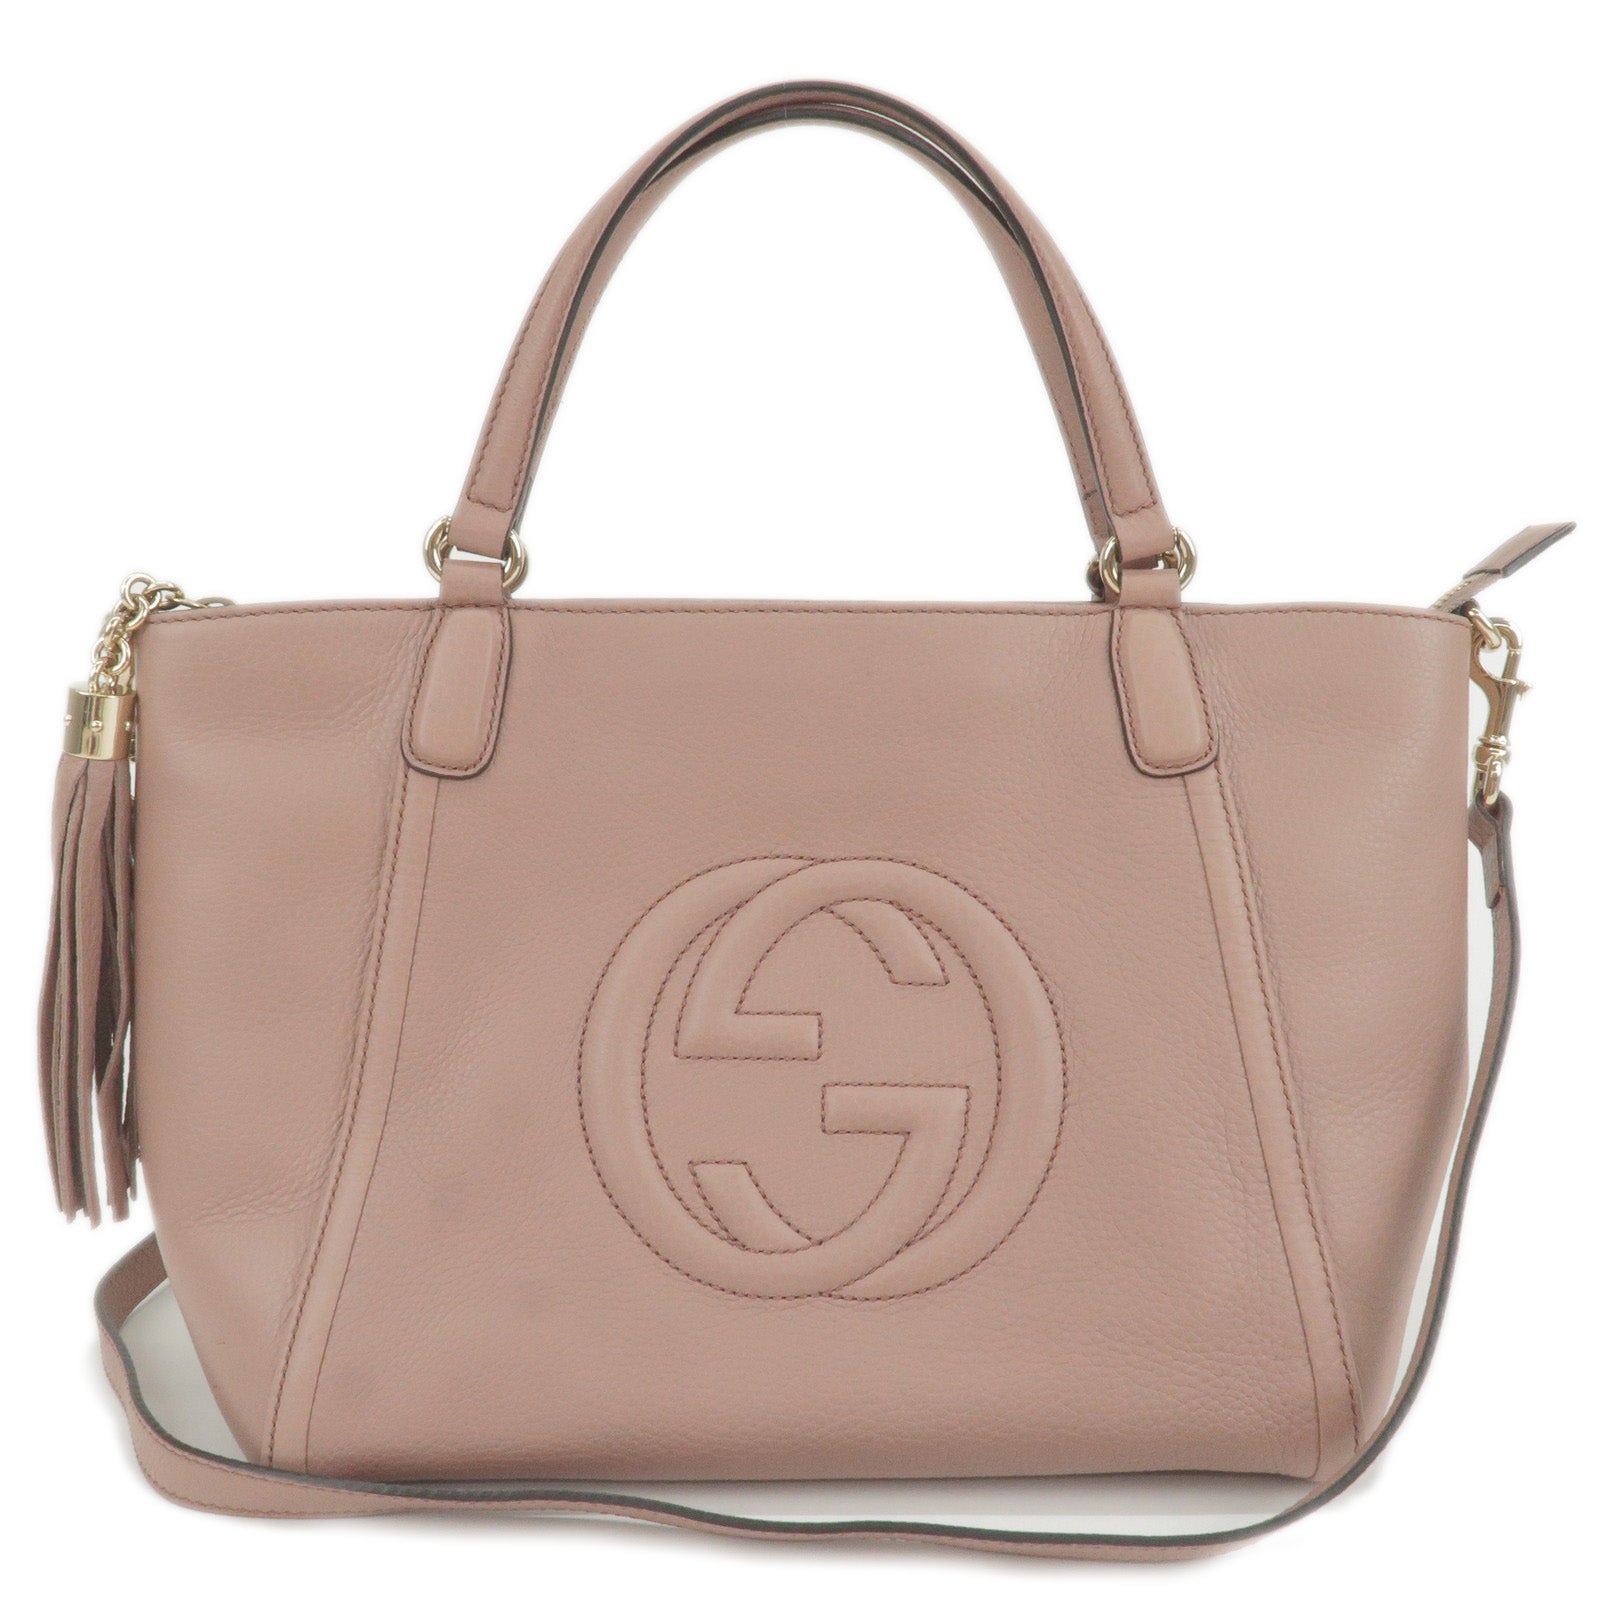 GUCCI-SOHO-Interlocking-G-Leather-2Way-Hand-Bag-Pink-369176